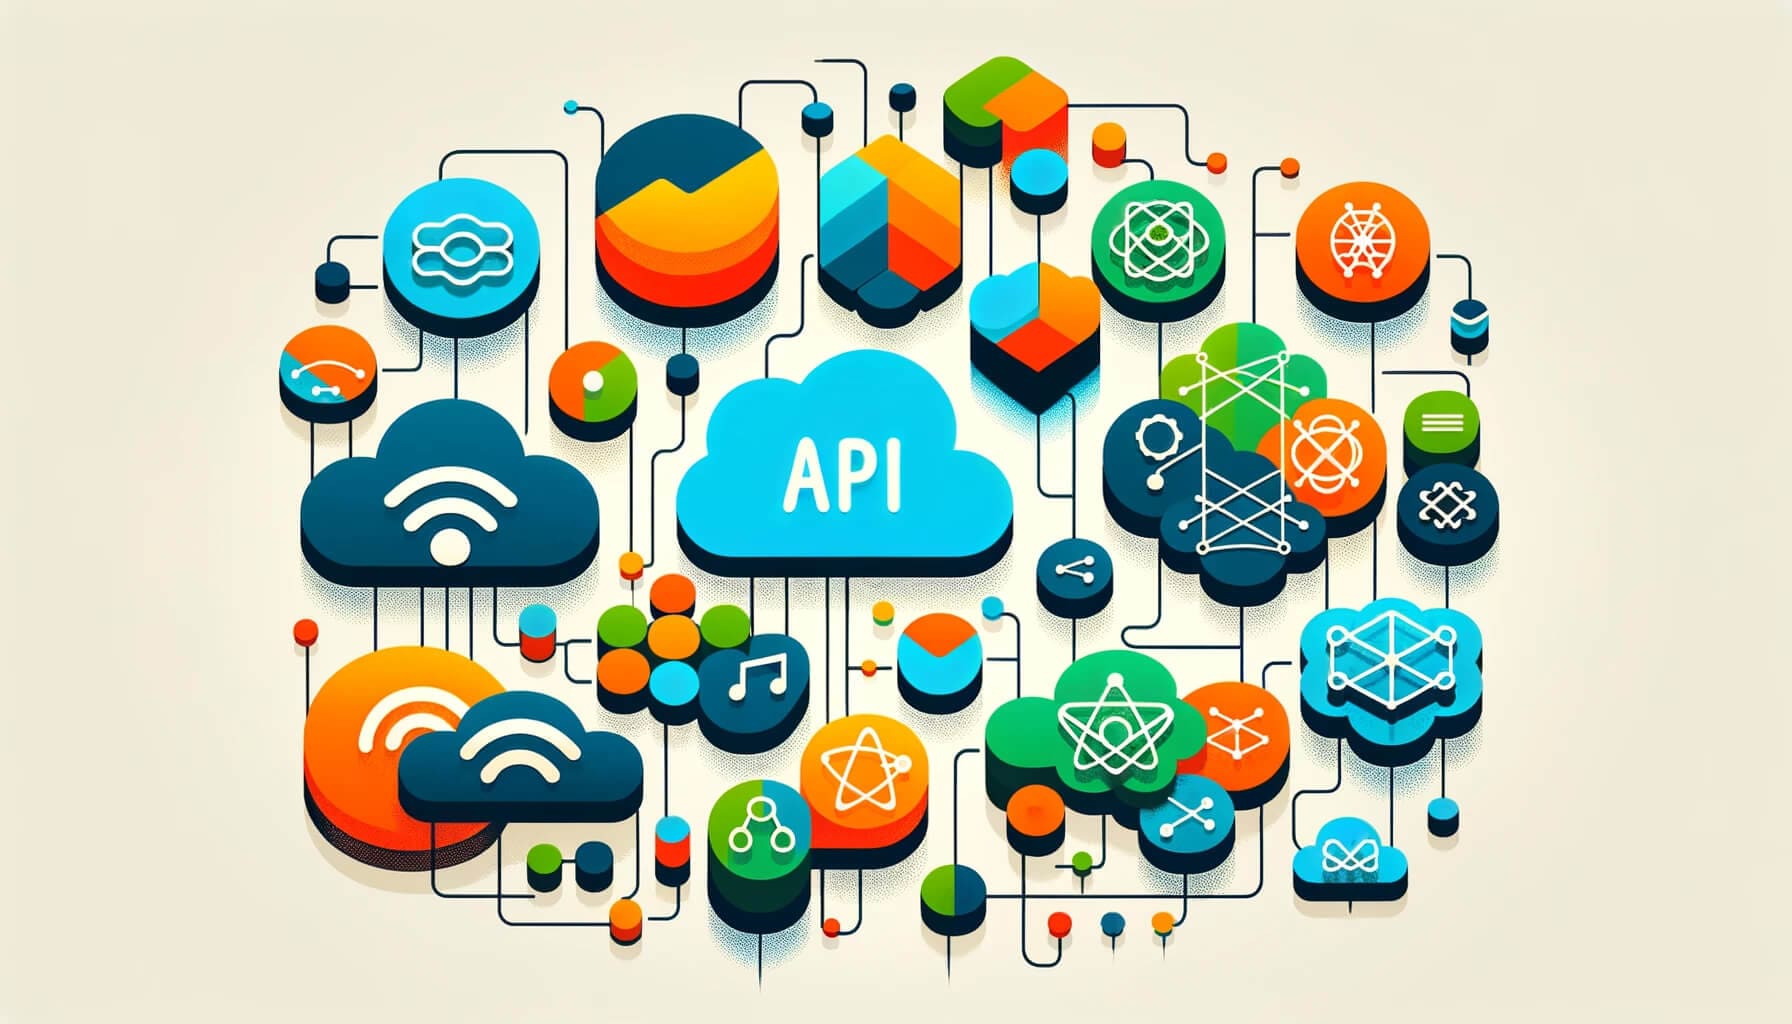 Different types of APIs